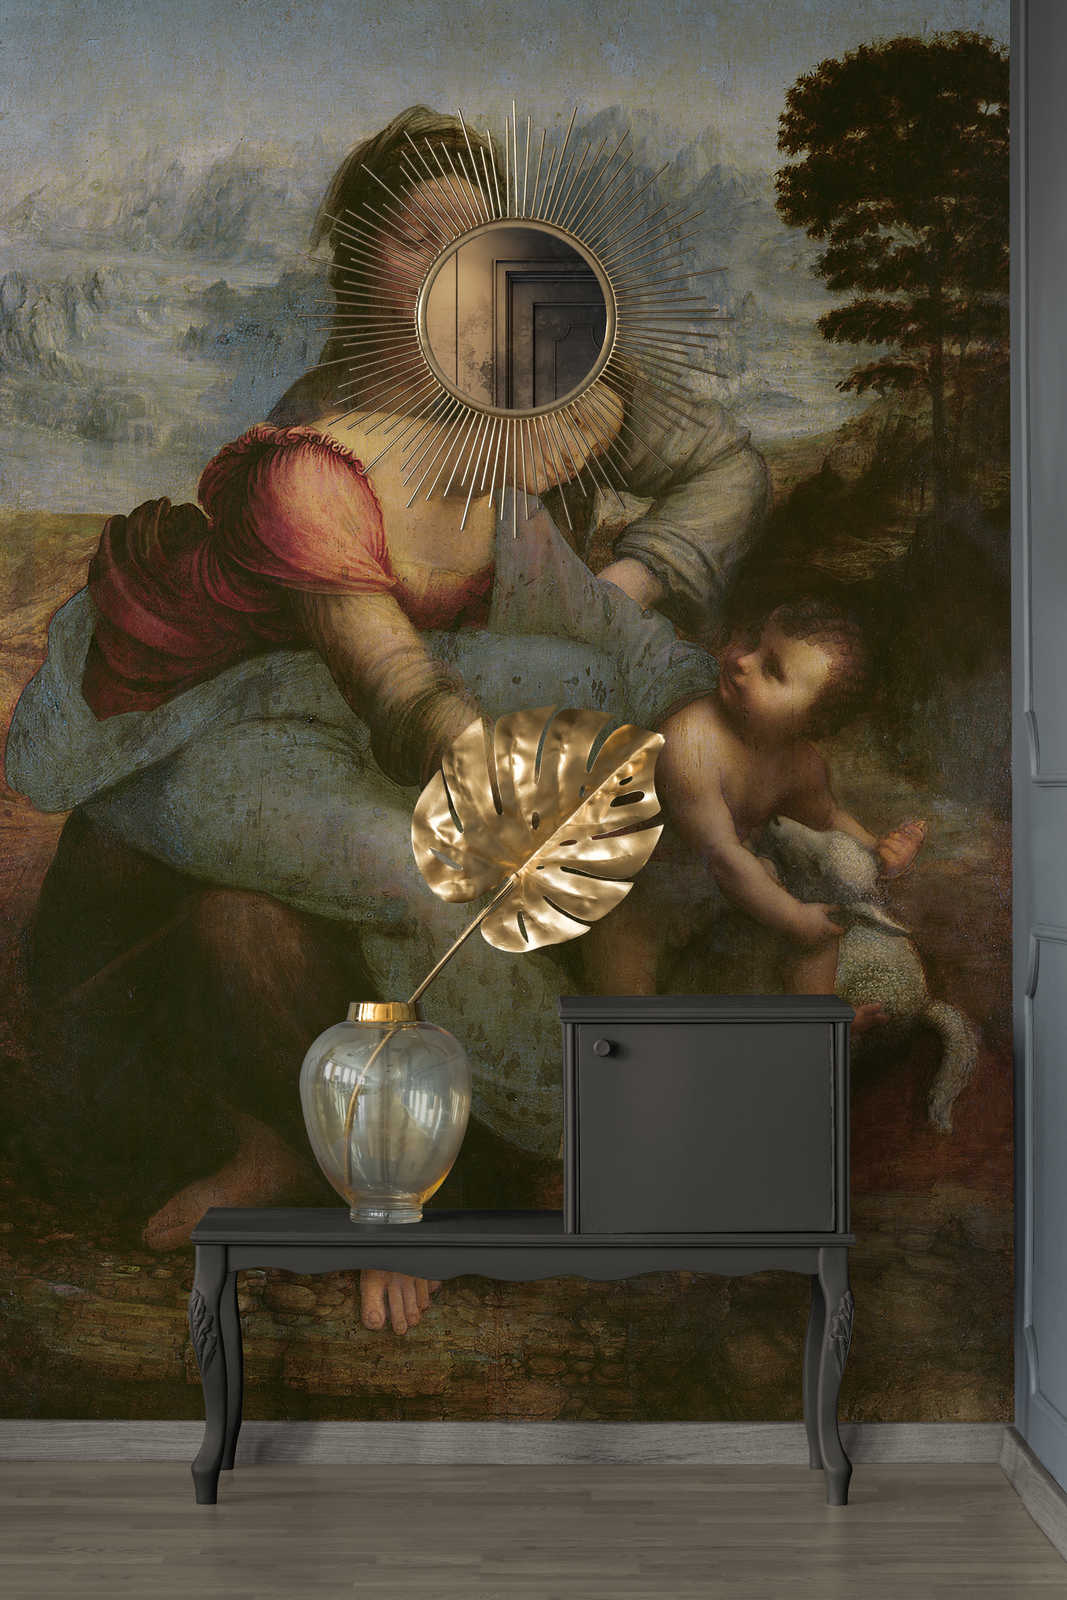             Photo wallpaper "Virgin and Child with St. Annaum" by Leonardo da Vinci
        